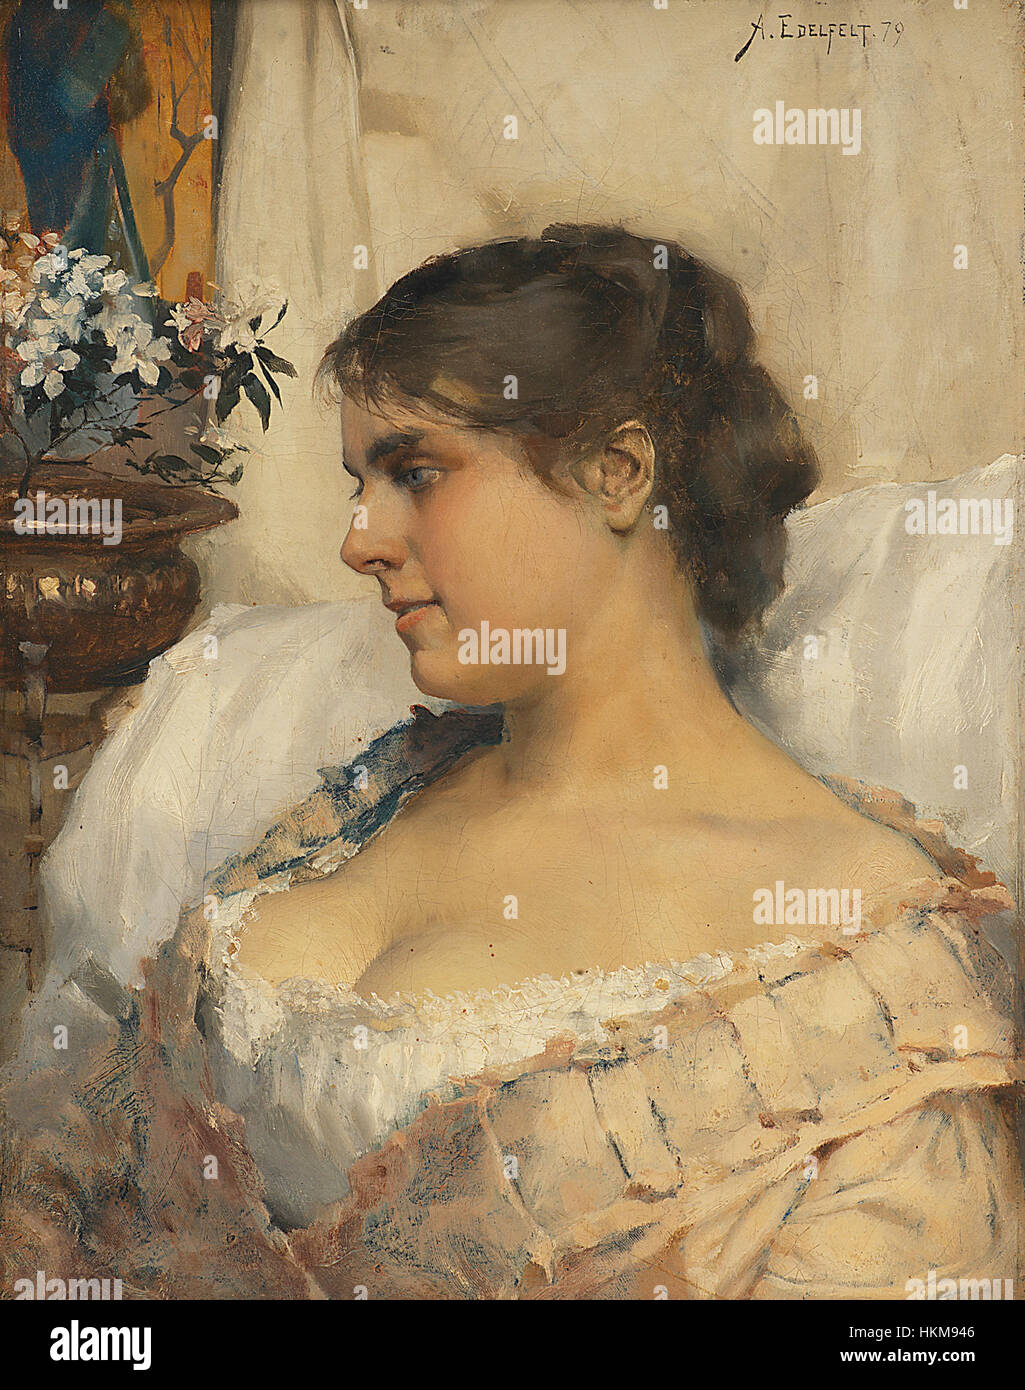 Albert Edelfelt-Ung kvinna ho peccato boudoir 1879 Foto Stock